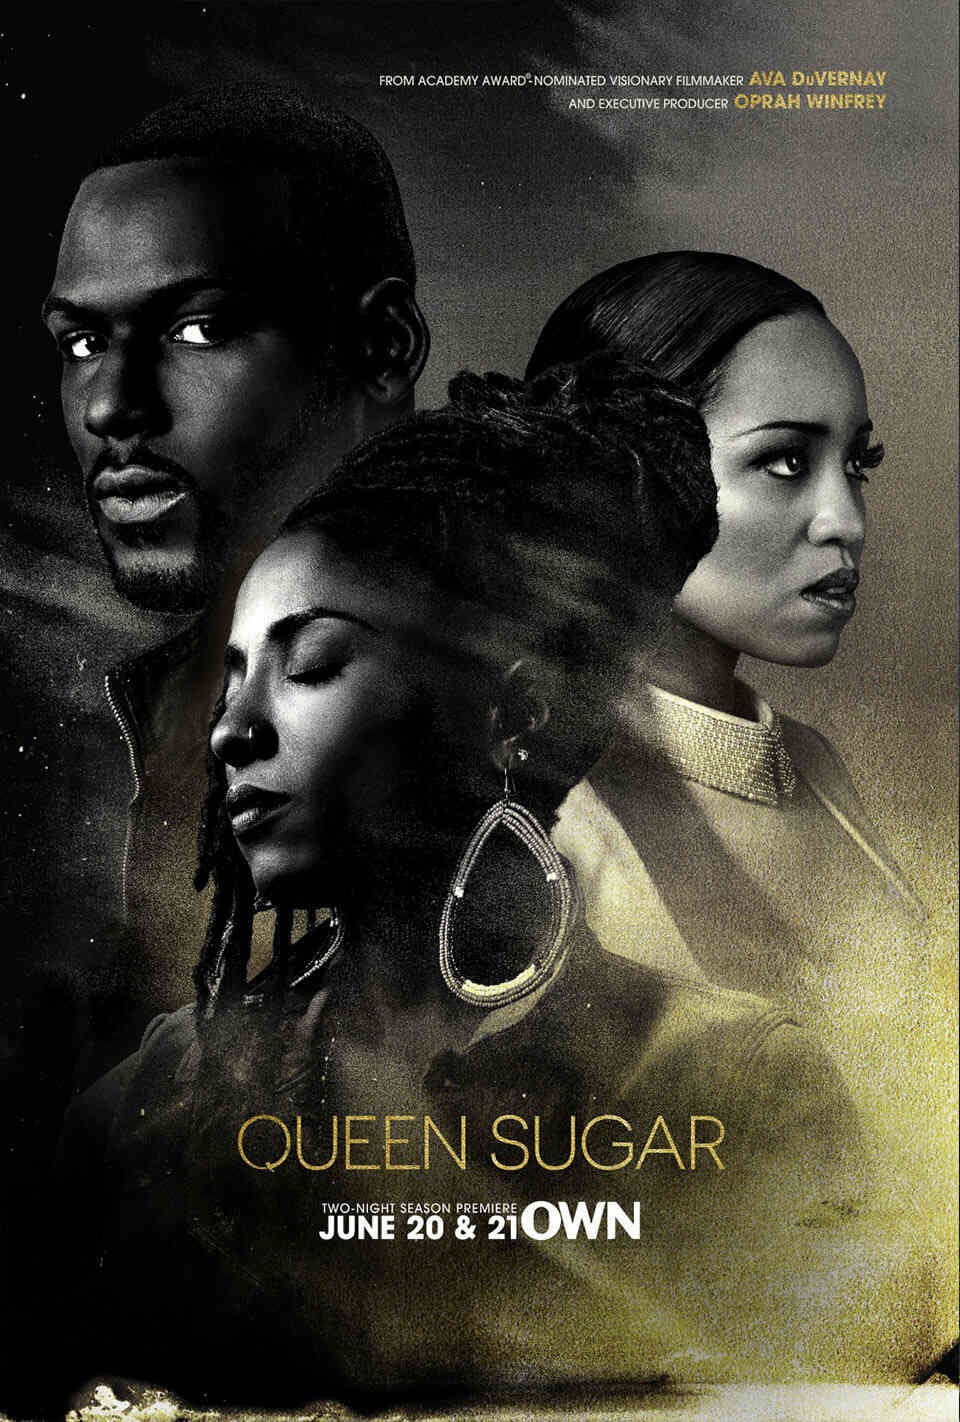 Read Queen Sugar screenplay (poster)